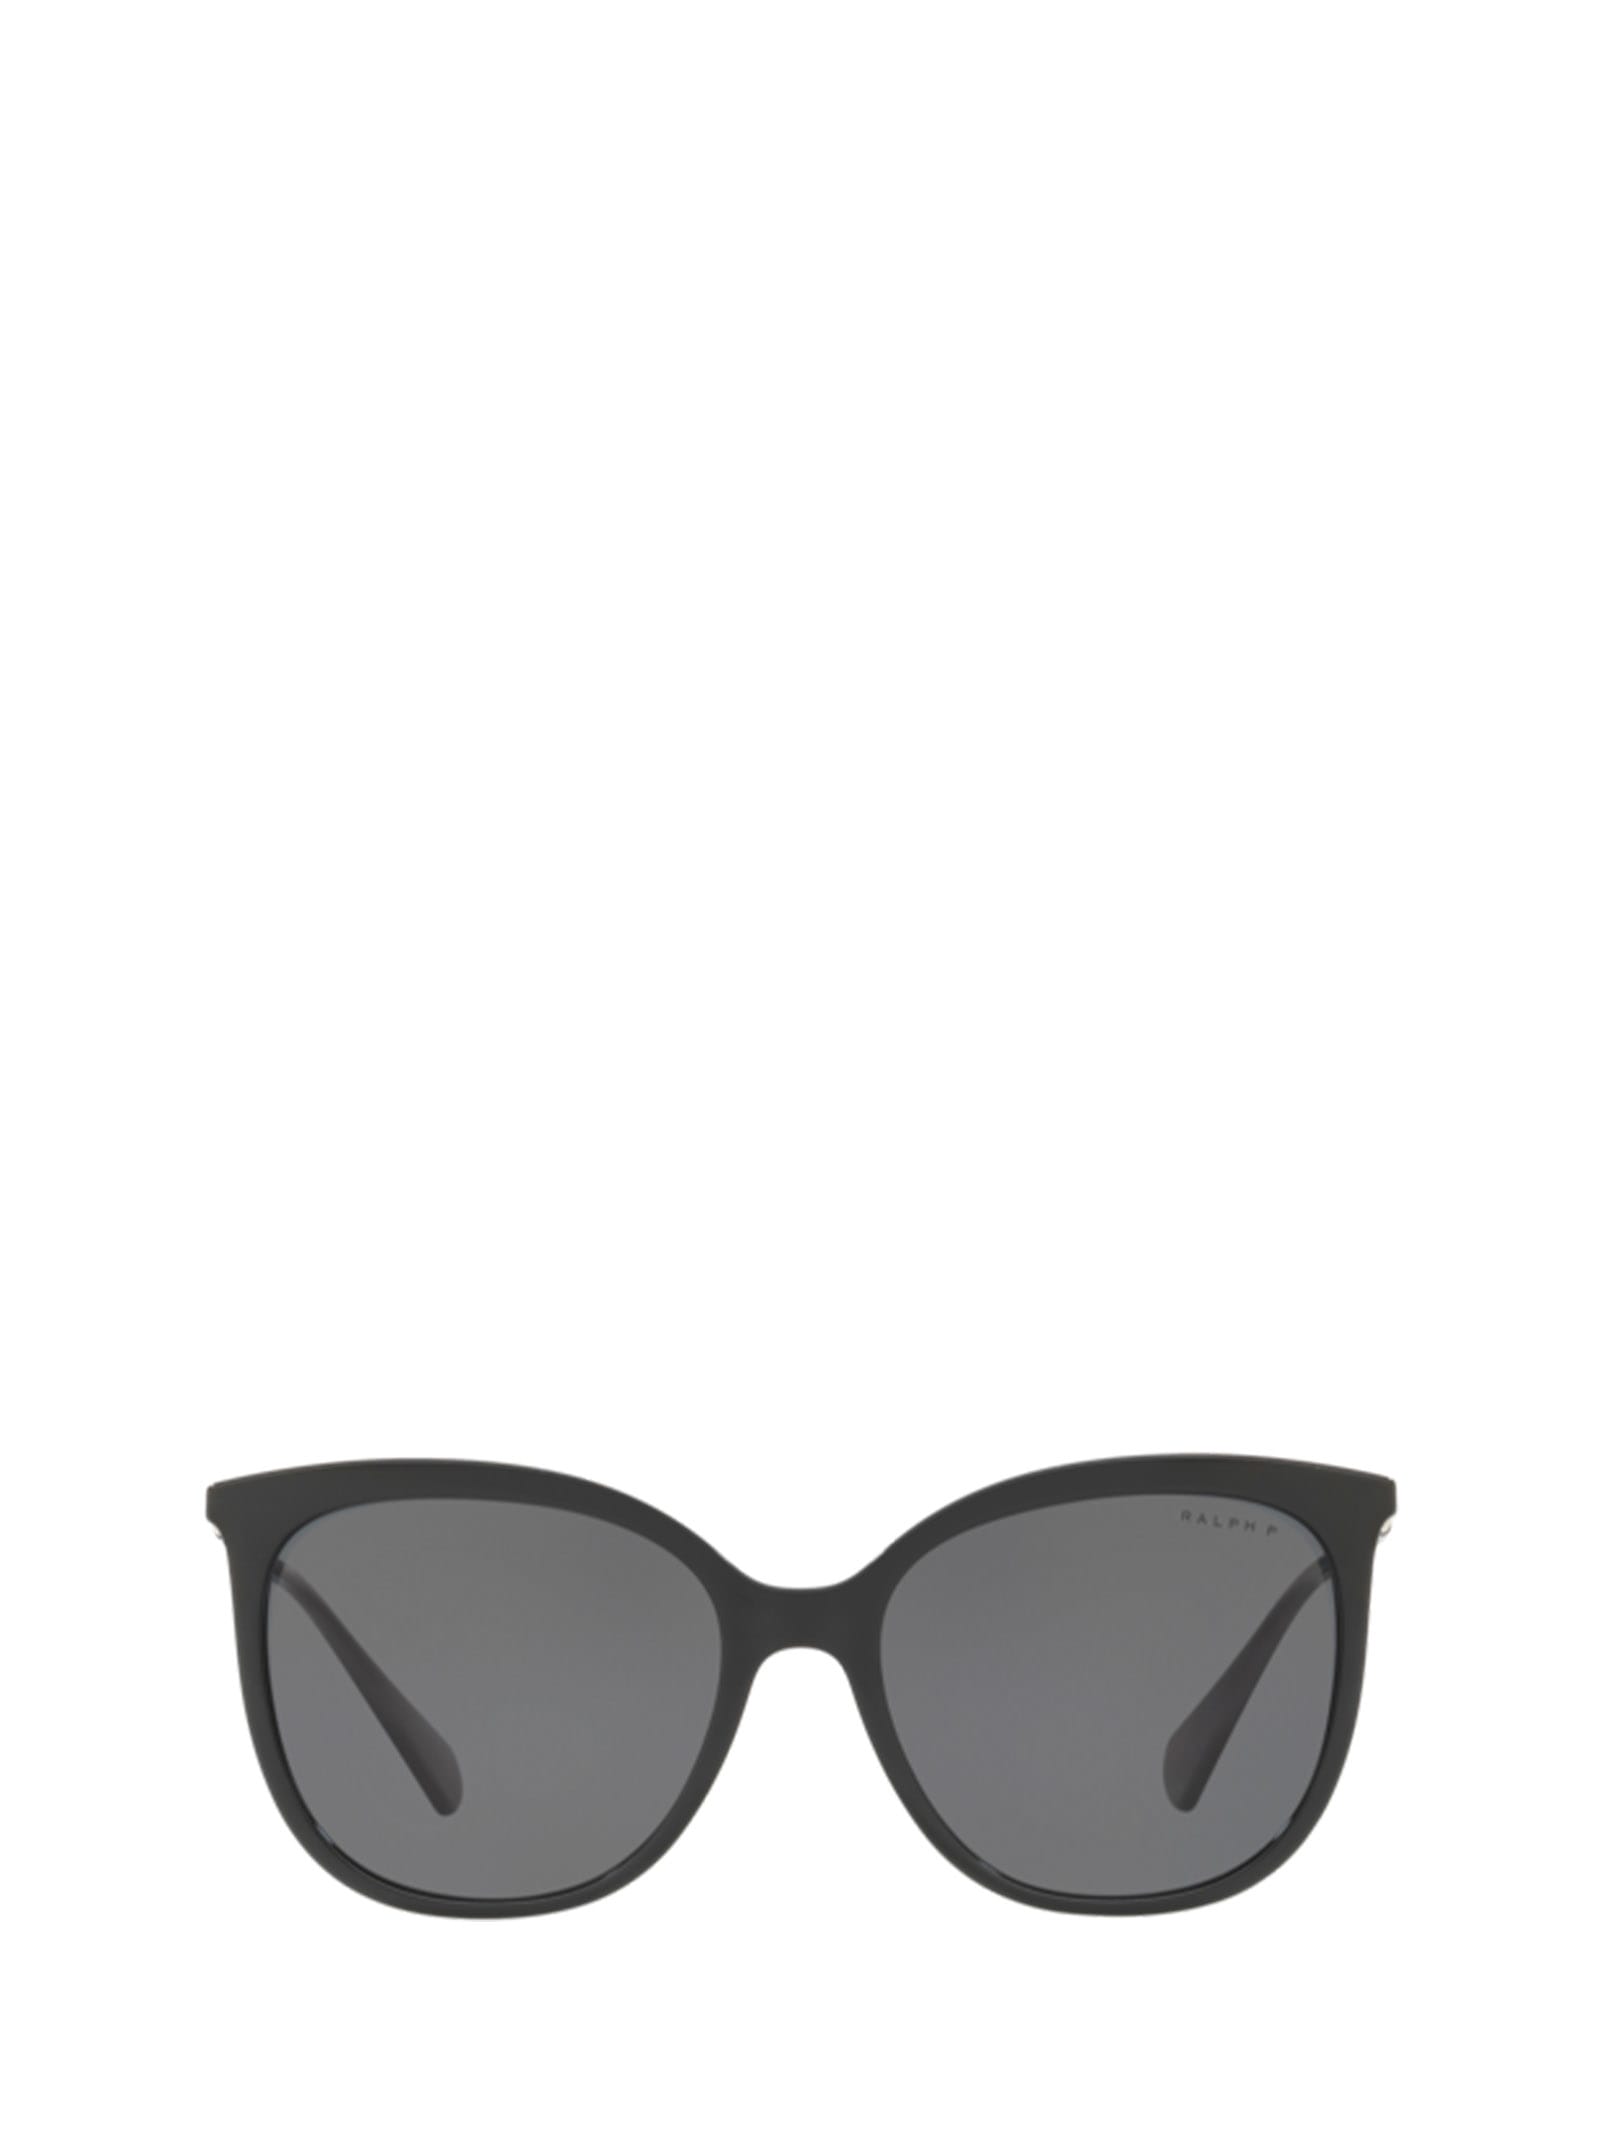 Polo Ralph Lauren Ra5248 Shiny Black Sunglasses